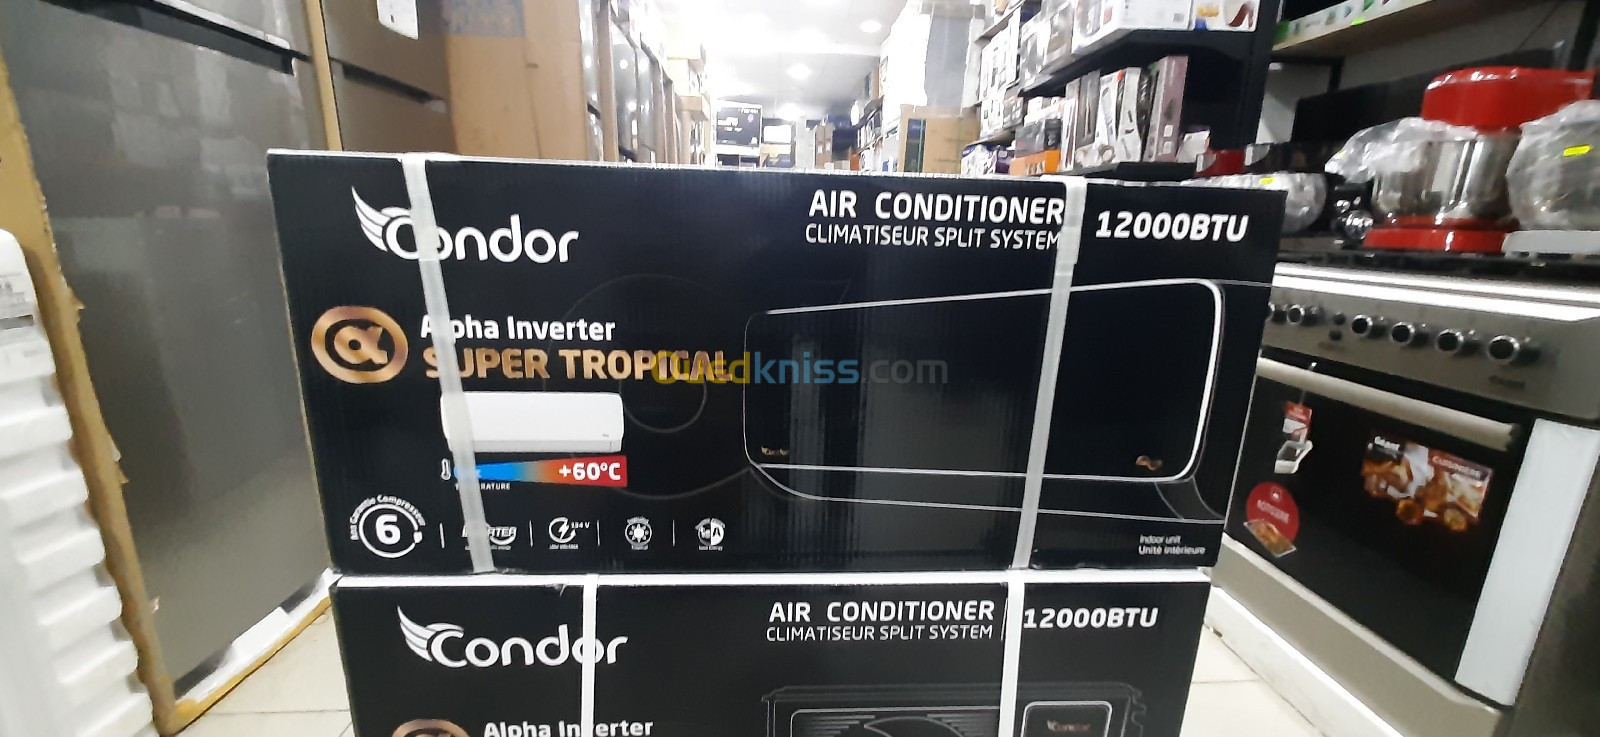 Promotion climatiseur condor 12000btu super tropical 